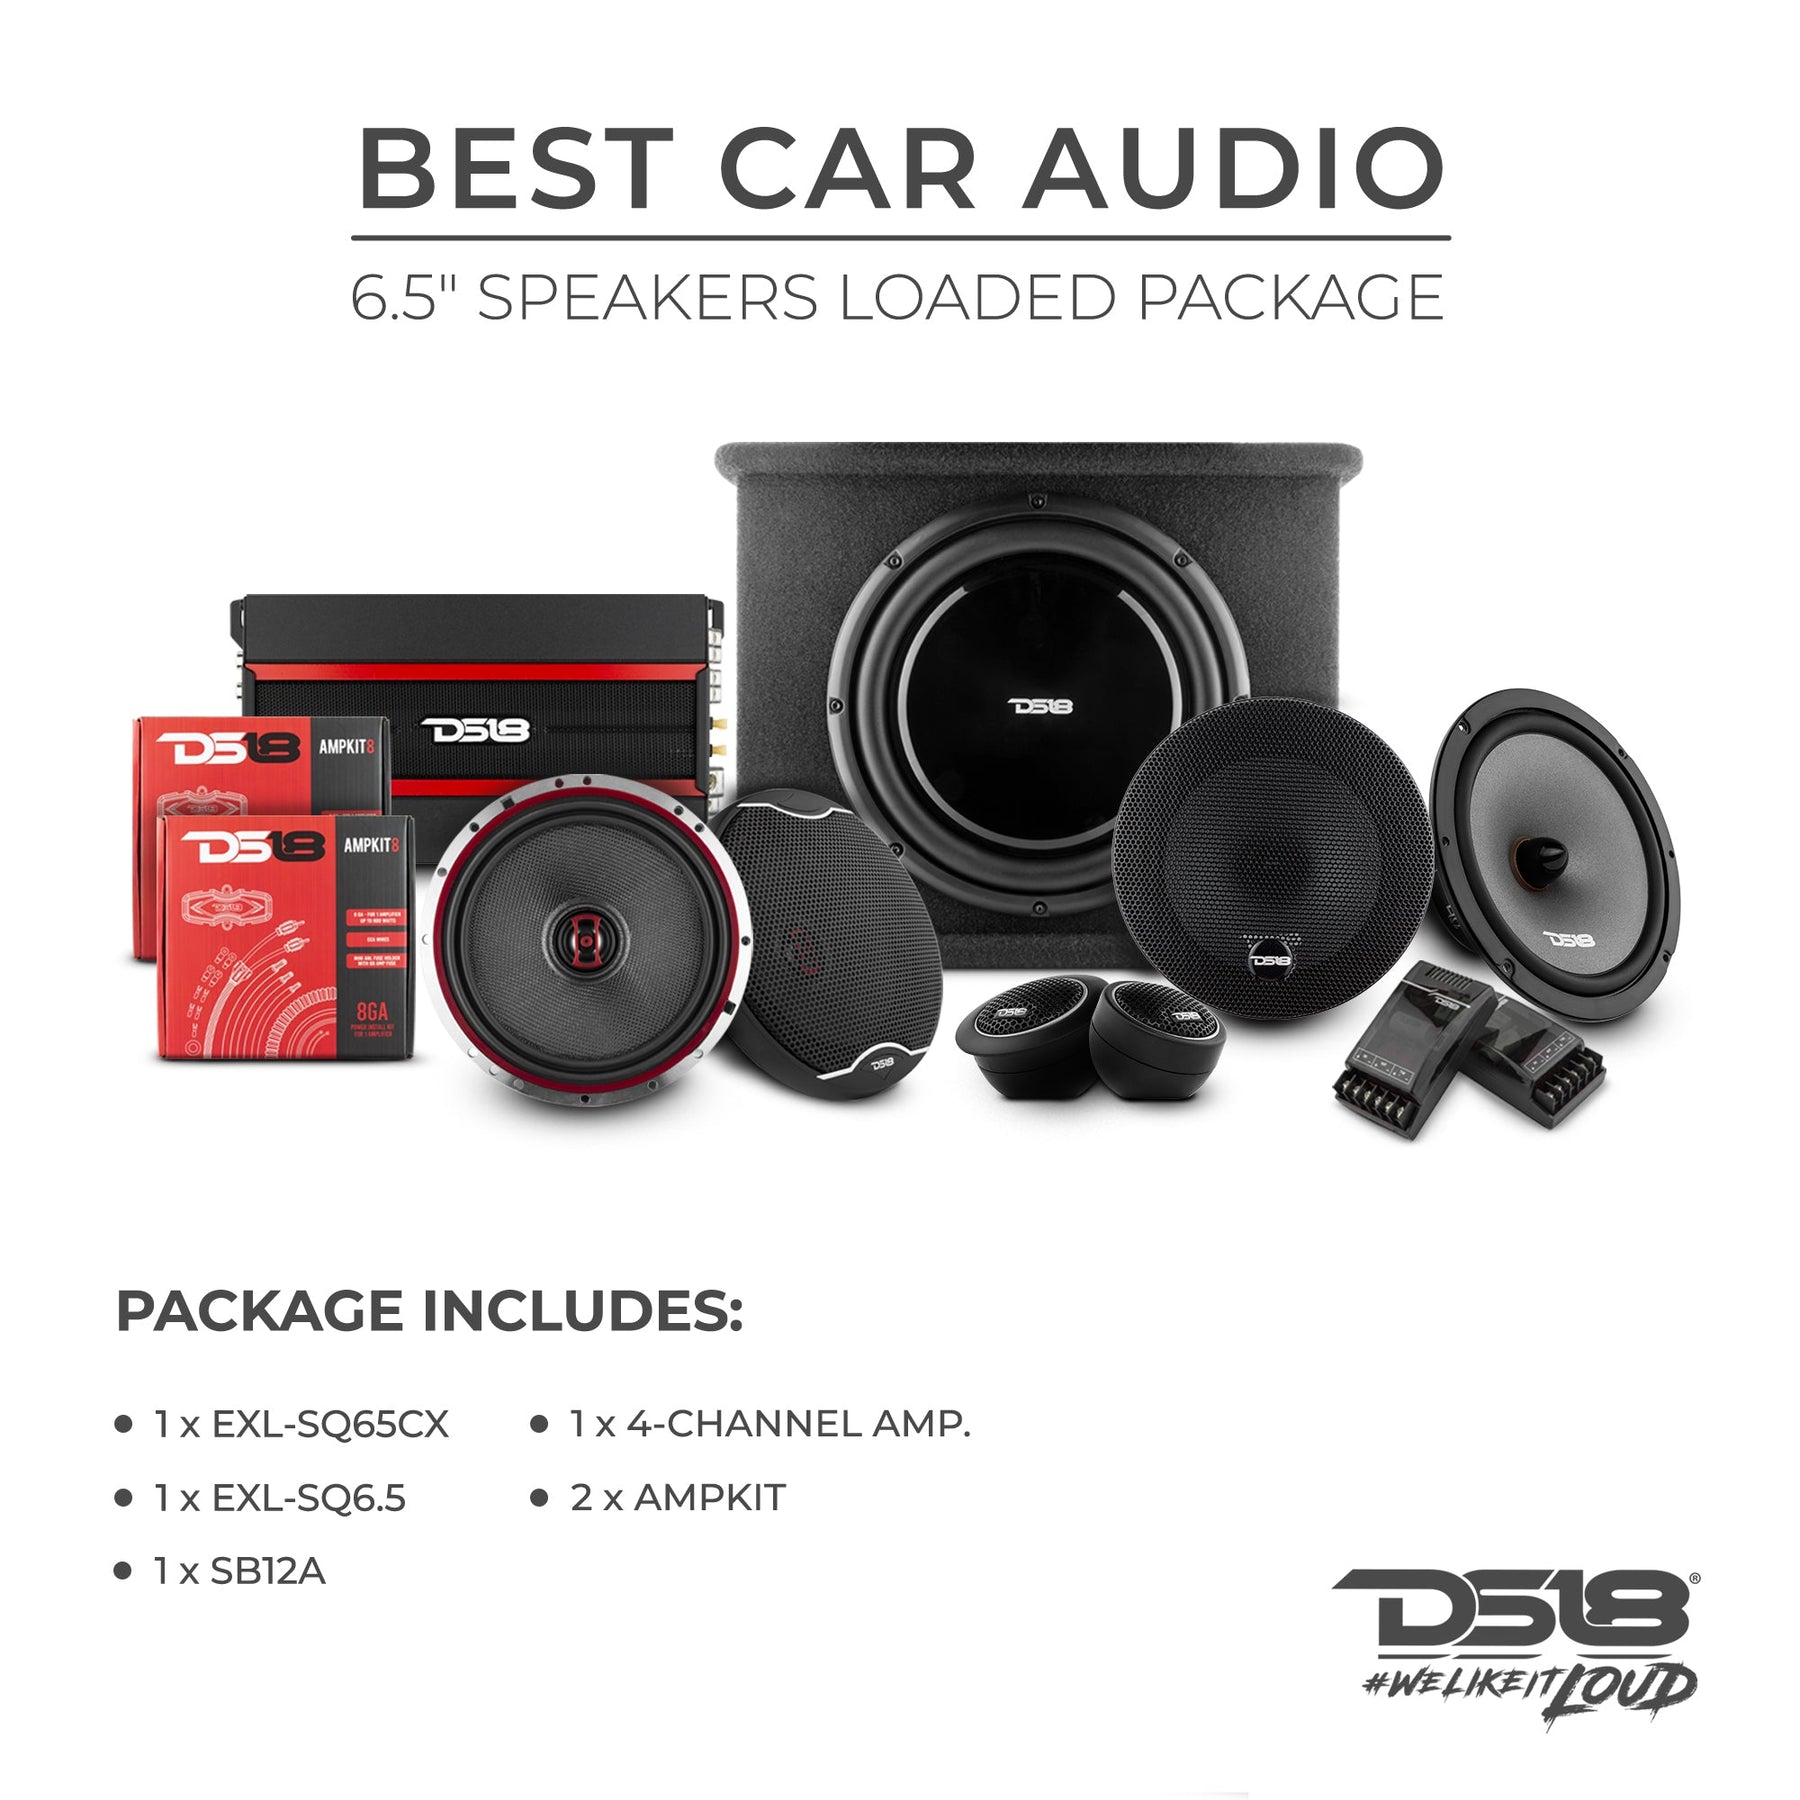 tale mikroskopisk Beregning DS18 Best Car Audio Package